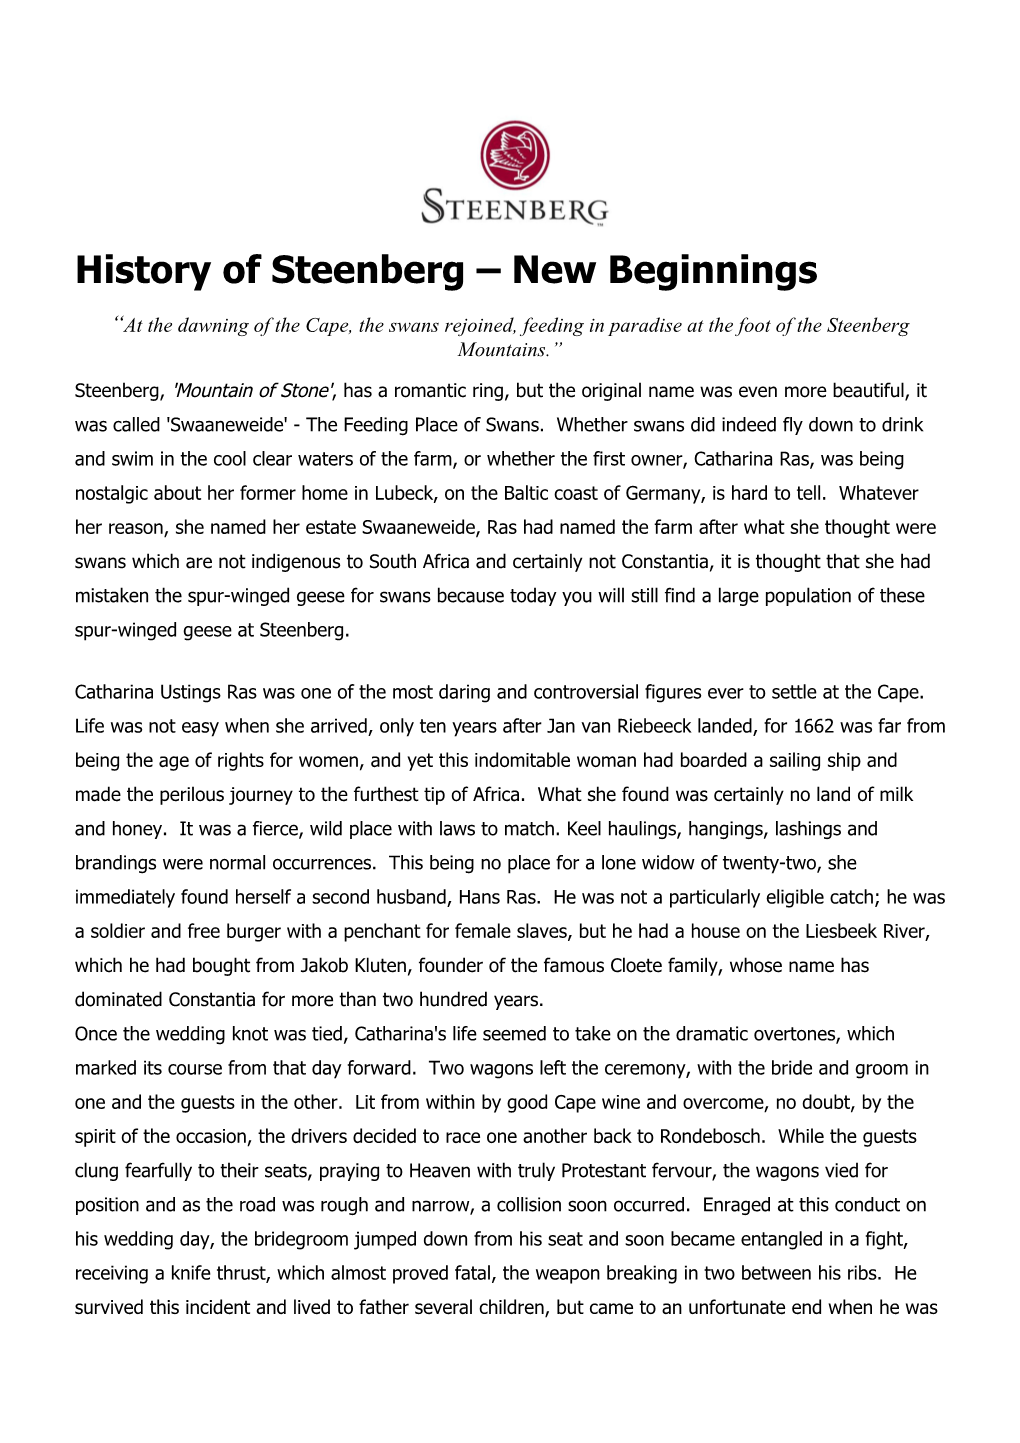 History of Steenberg New Beginnings